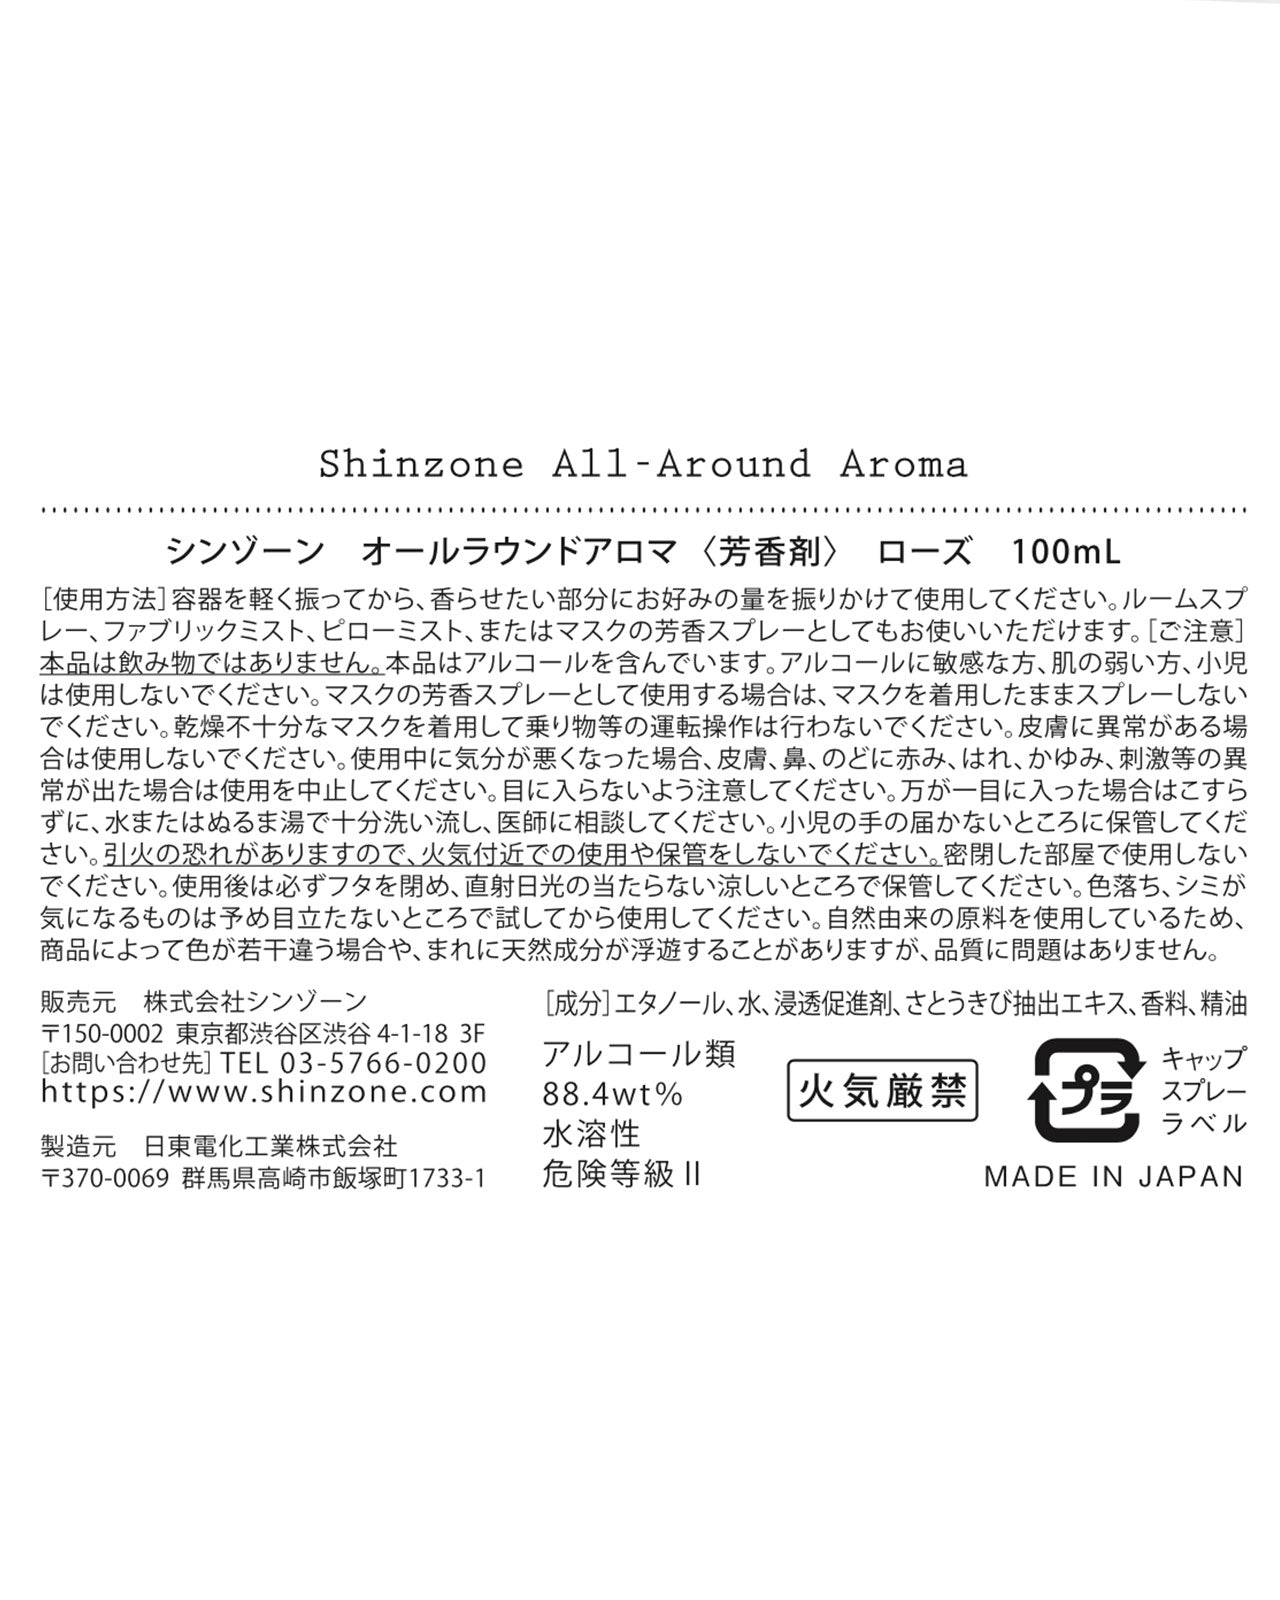 Shinzone All-Around Aroma Rose